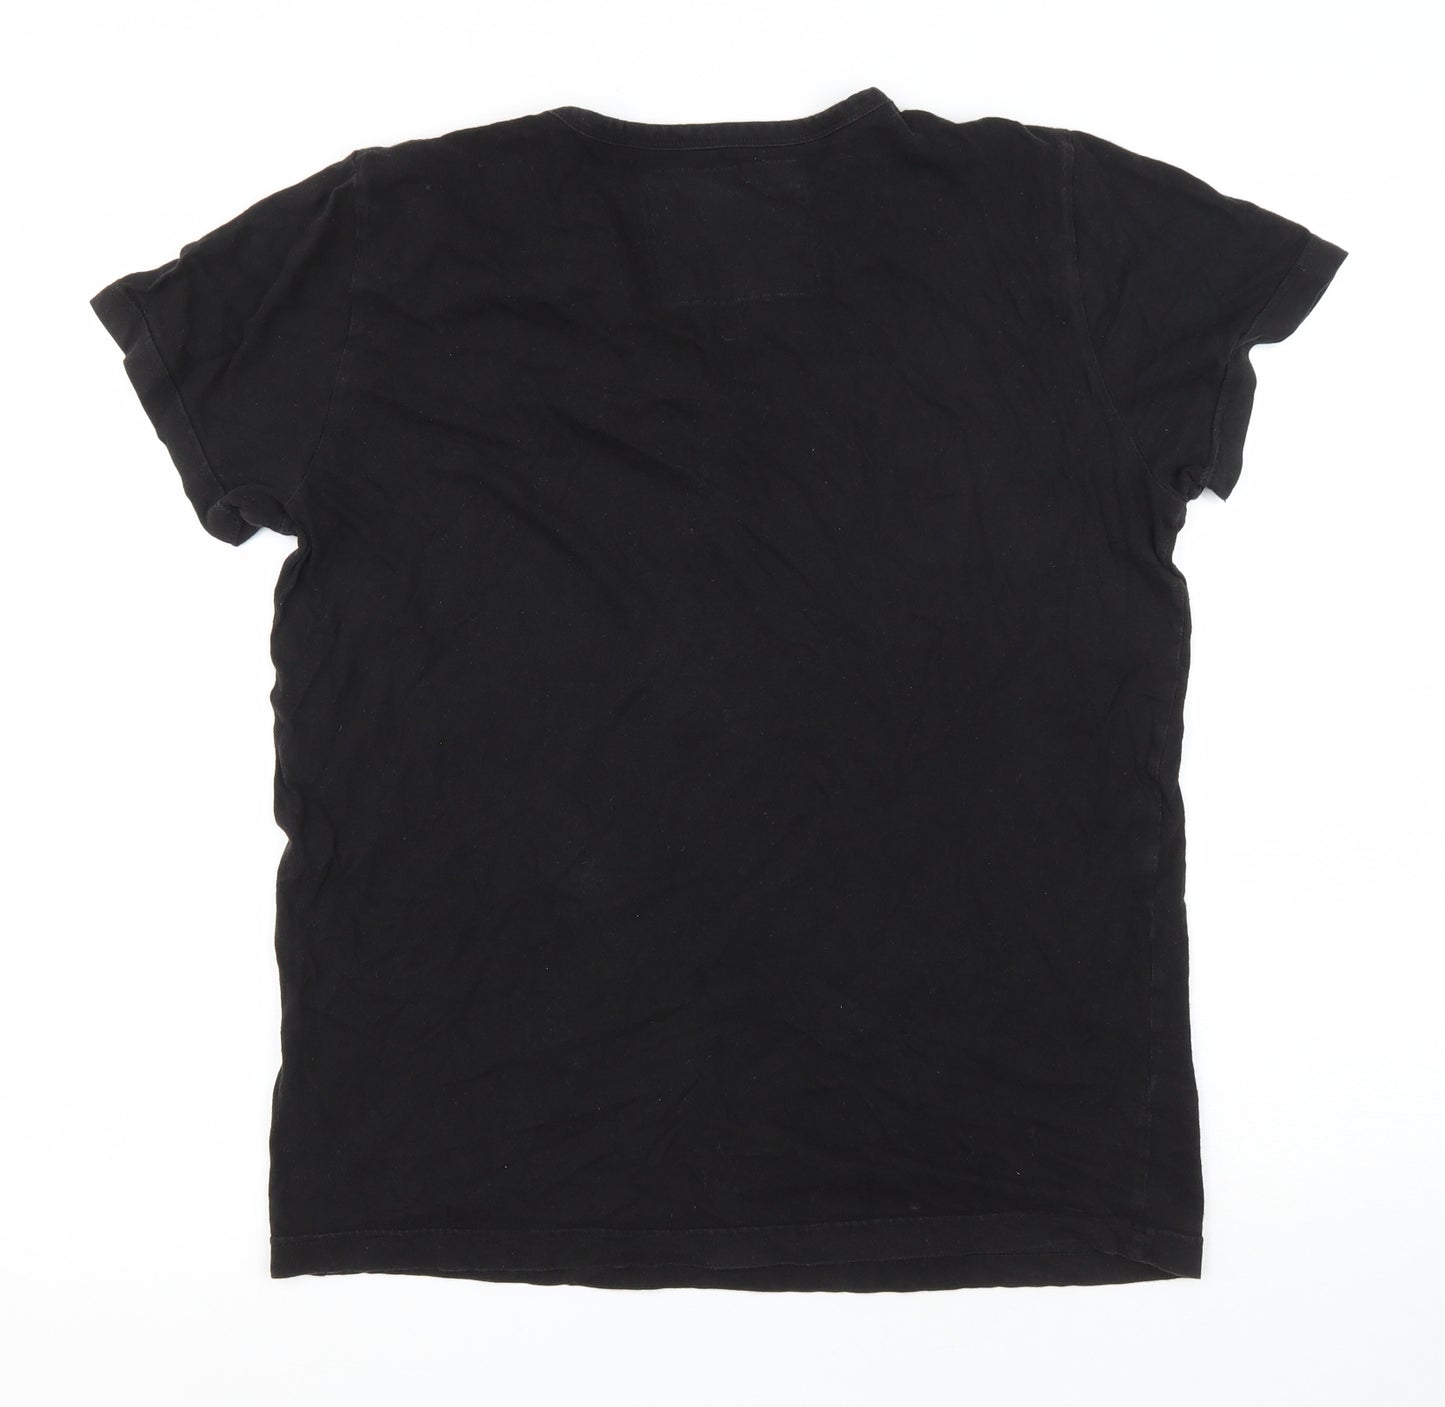 Easy Mens Black Cotton T-Shirt Size S V-Neck